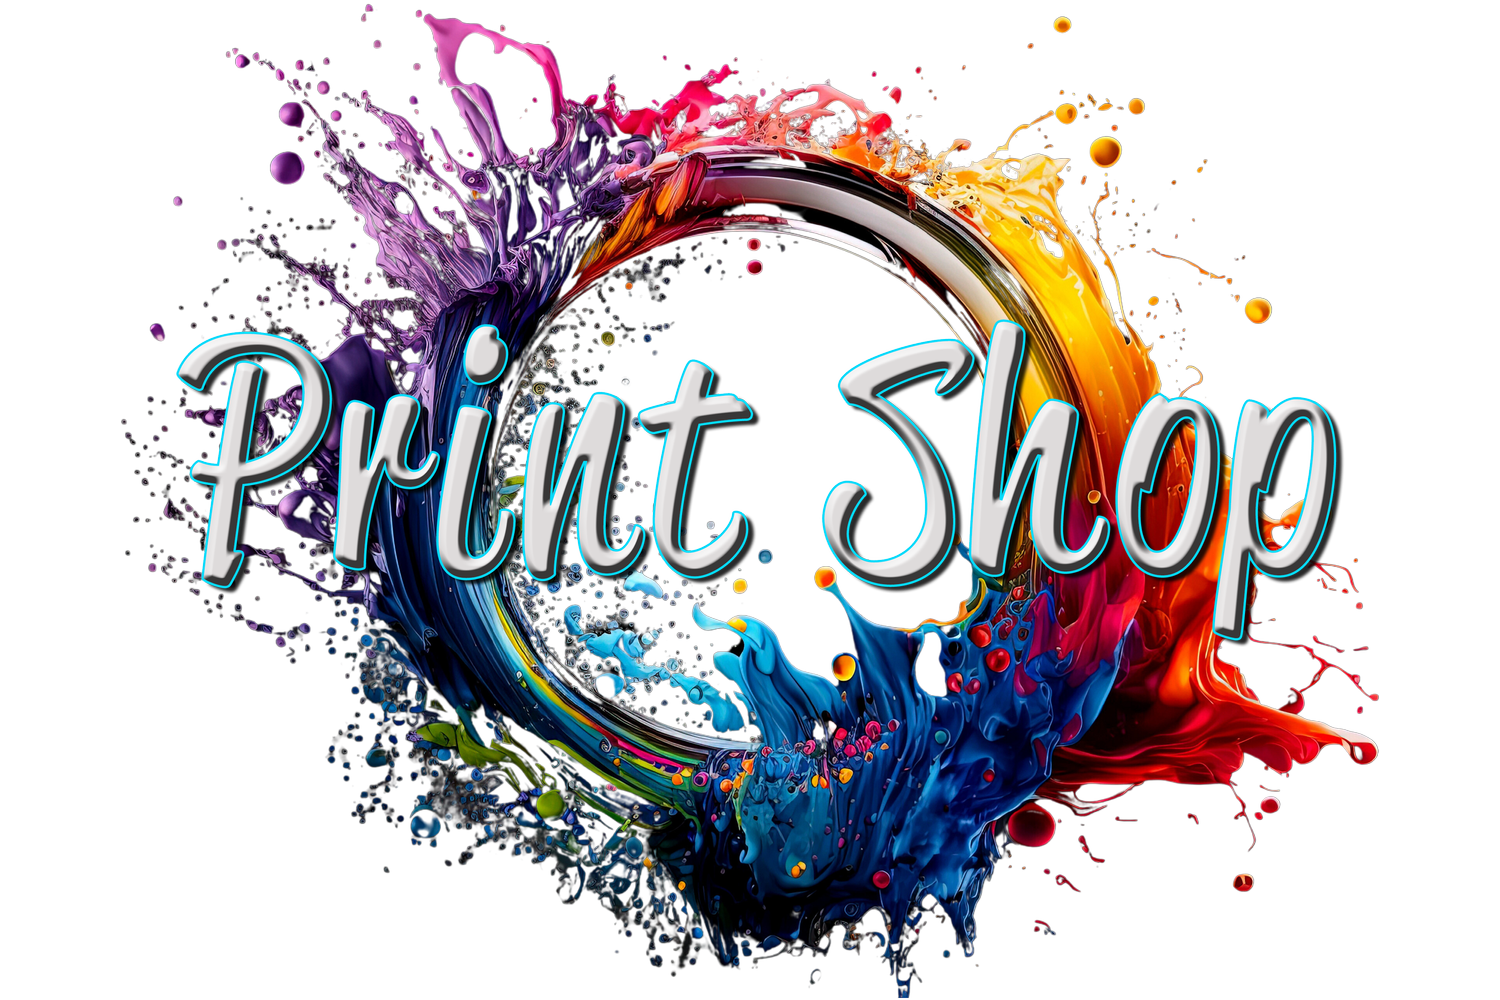 Print Shop / One Stop